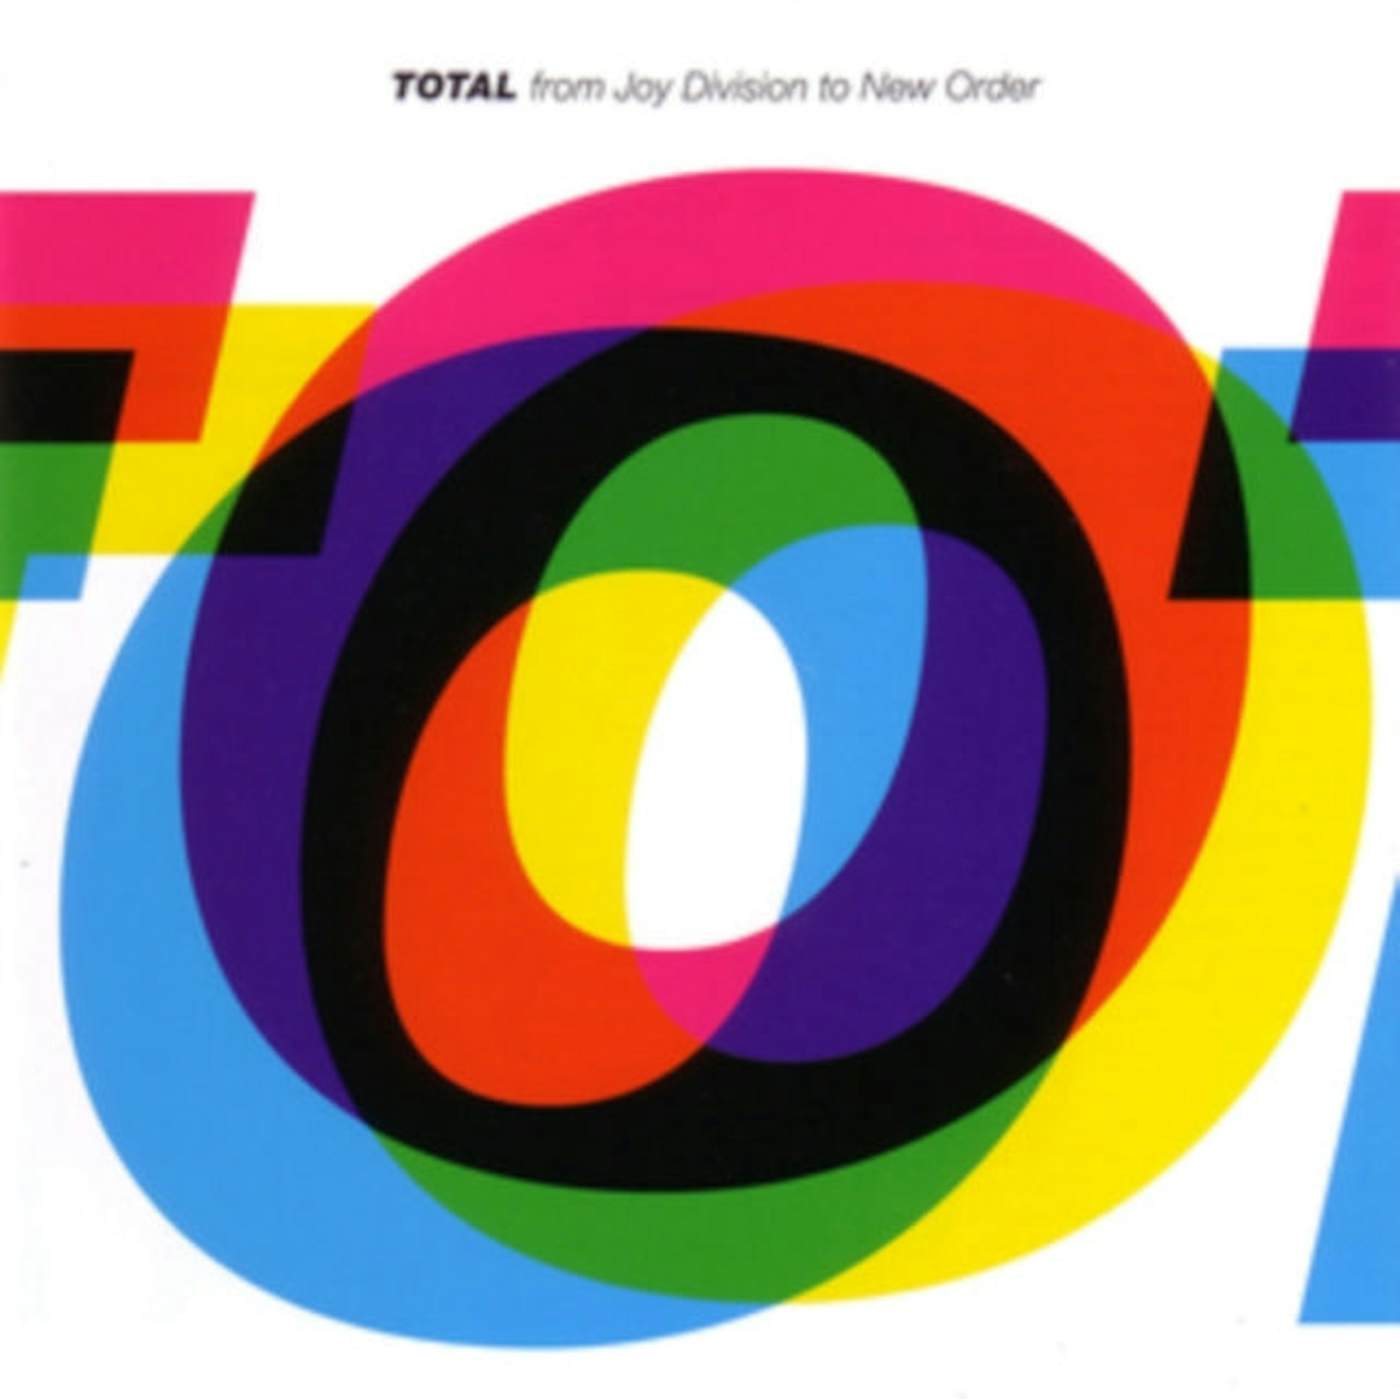 New Order / Joy Division LP Vinyl Record - Total